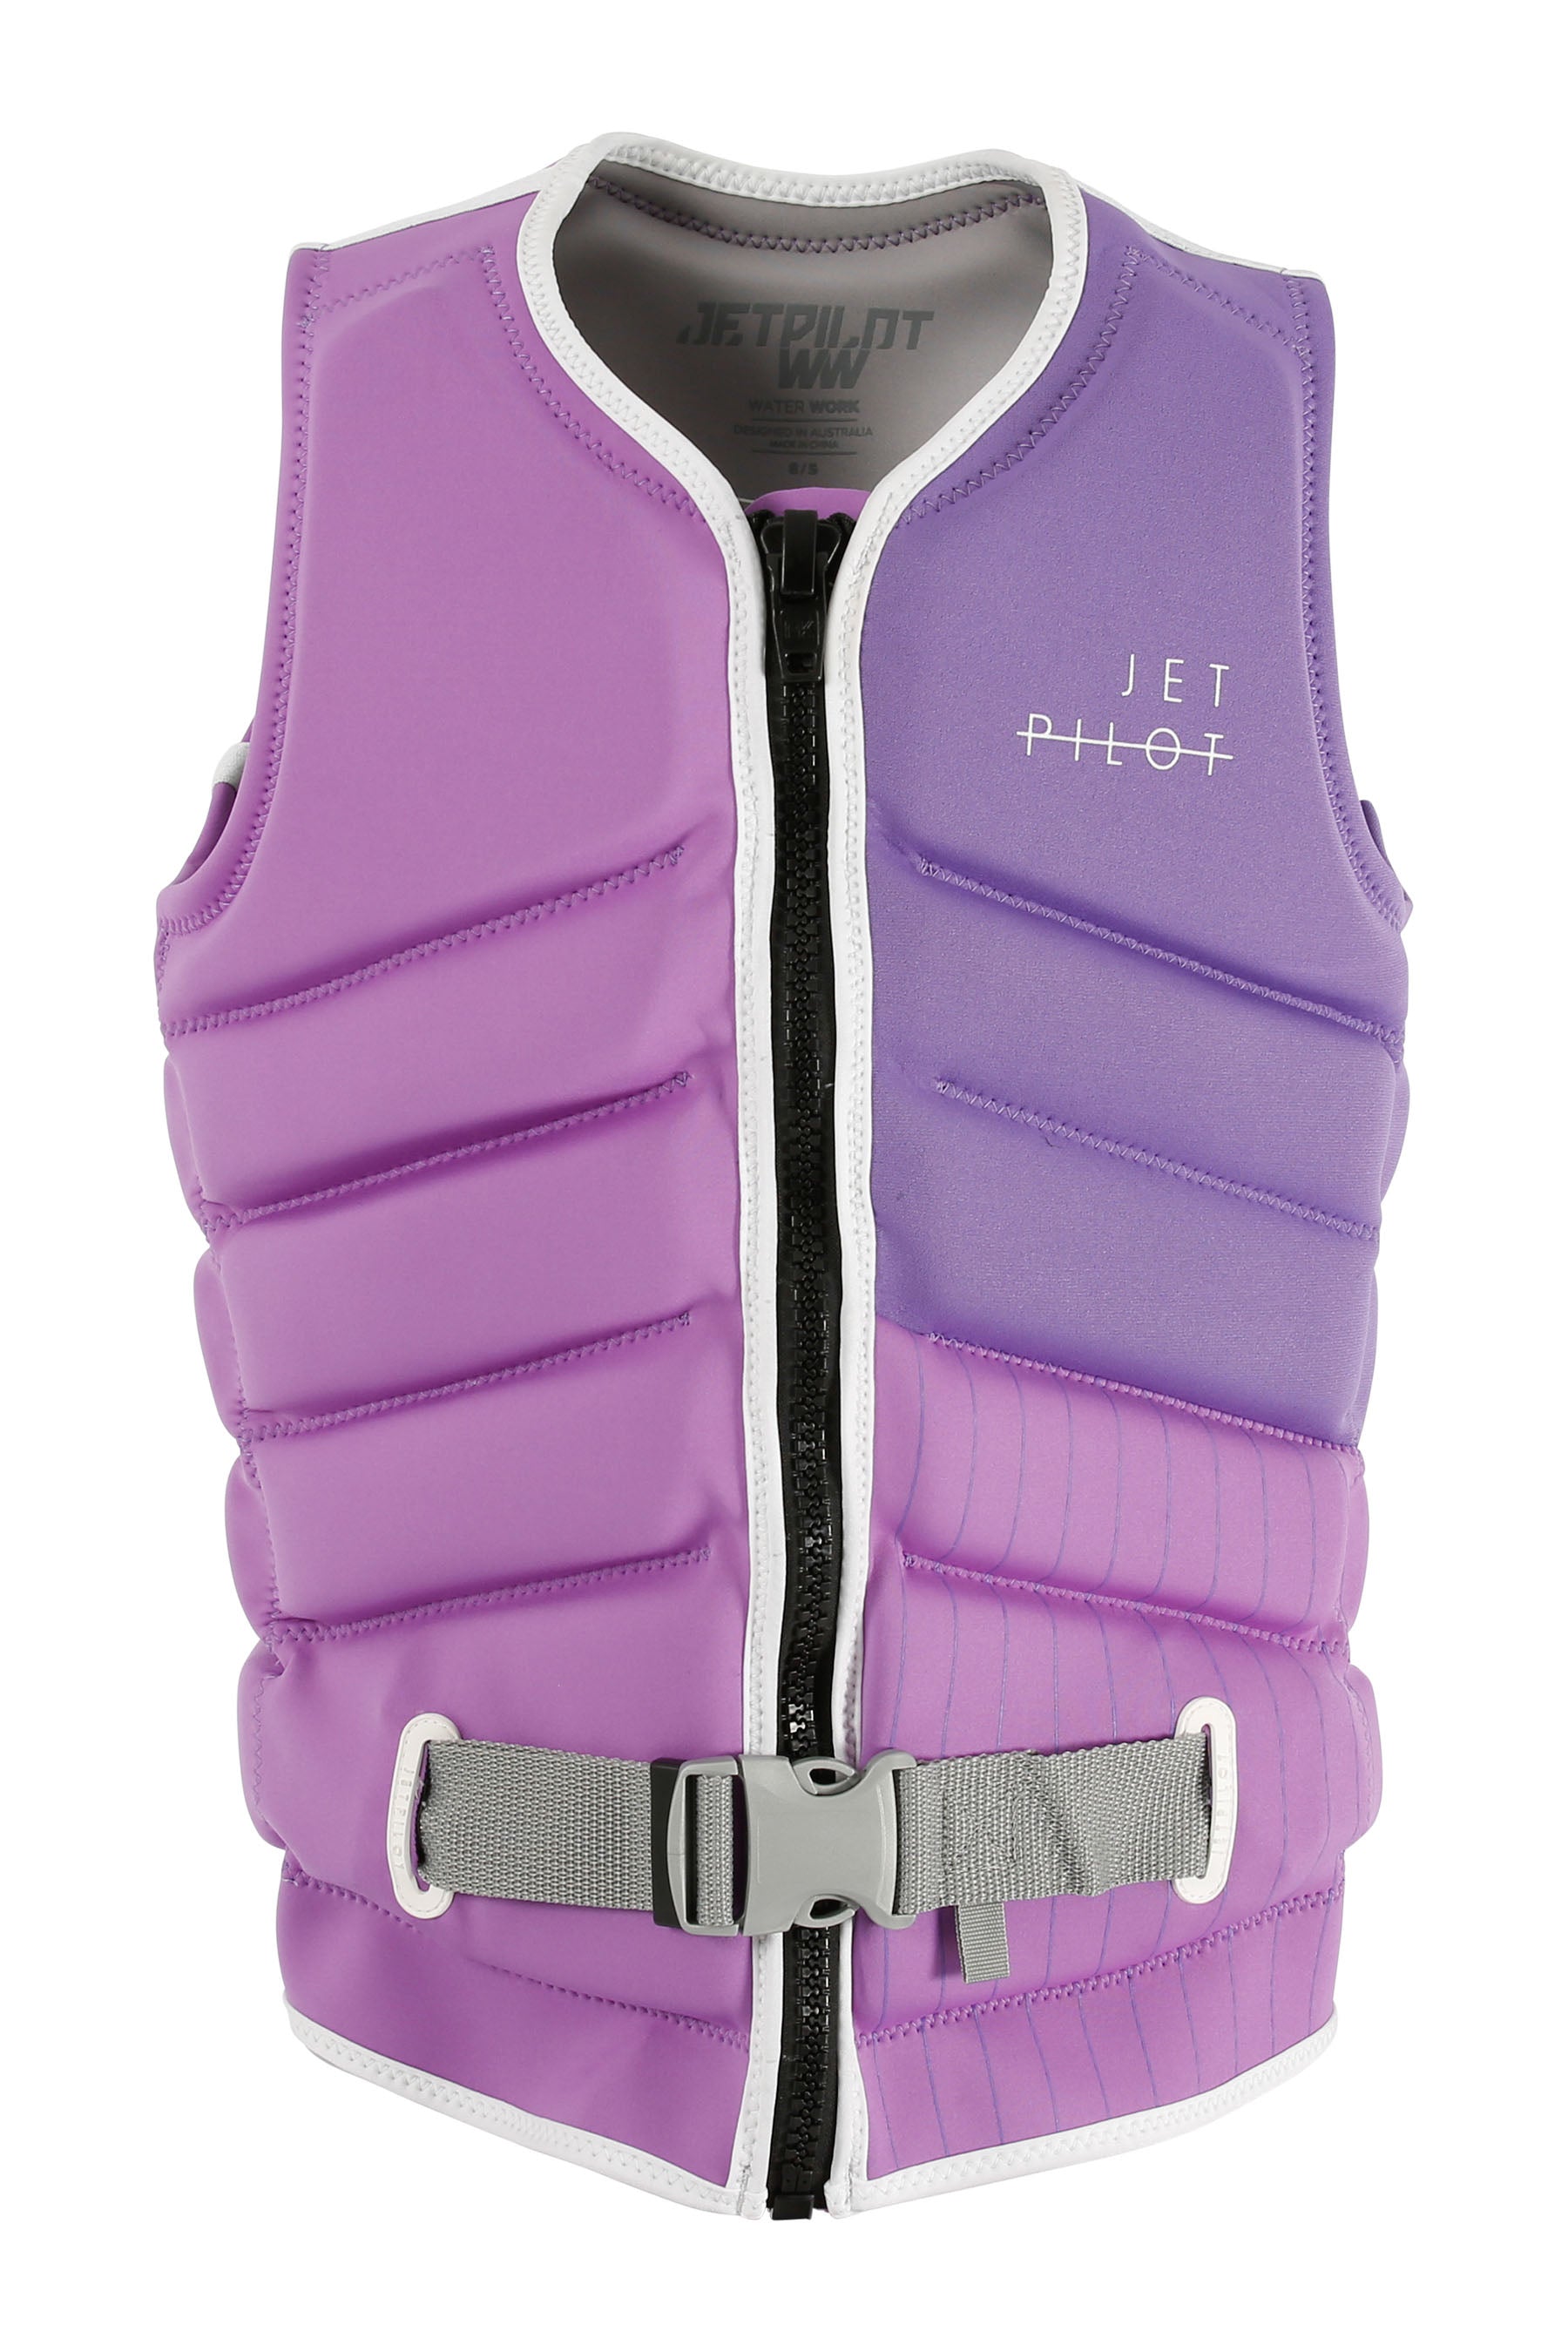 Jetpilot Pacer F/E Ladies Life Jacket Purple